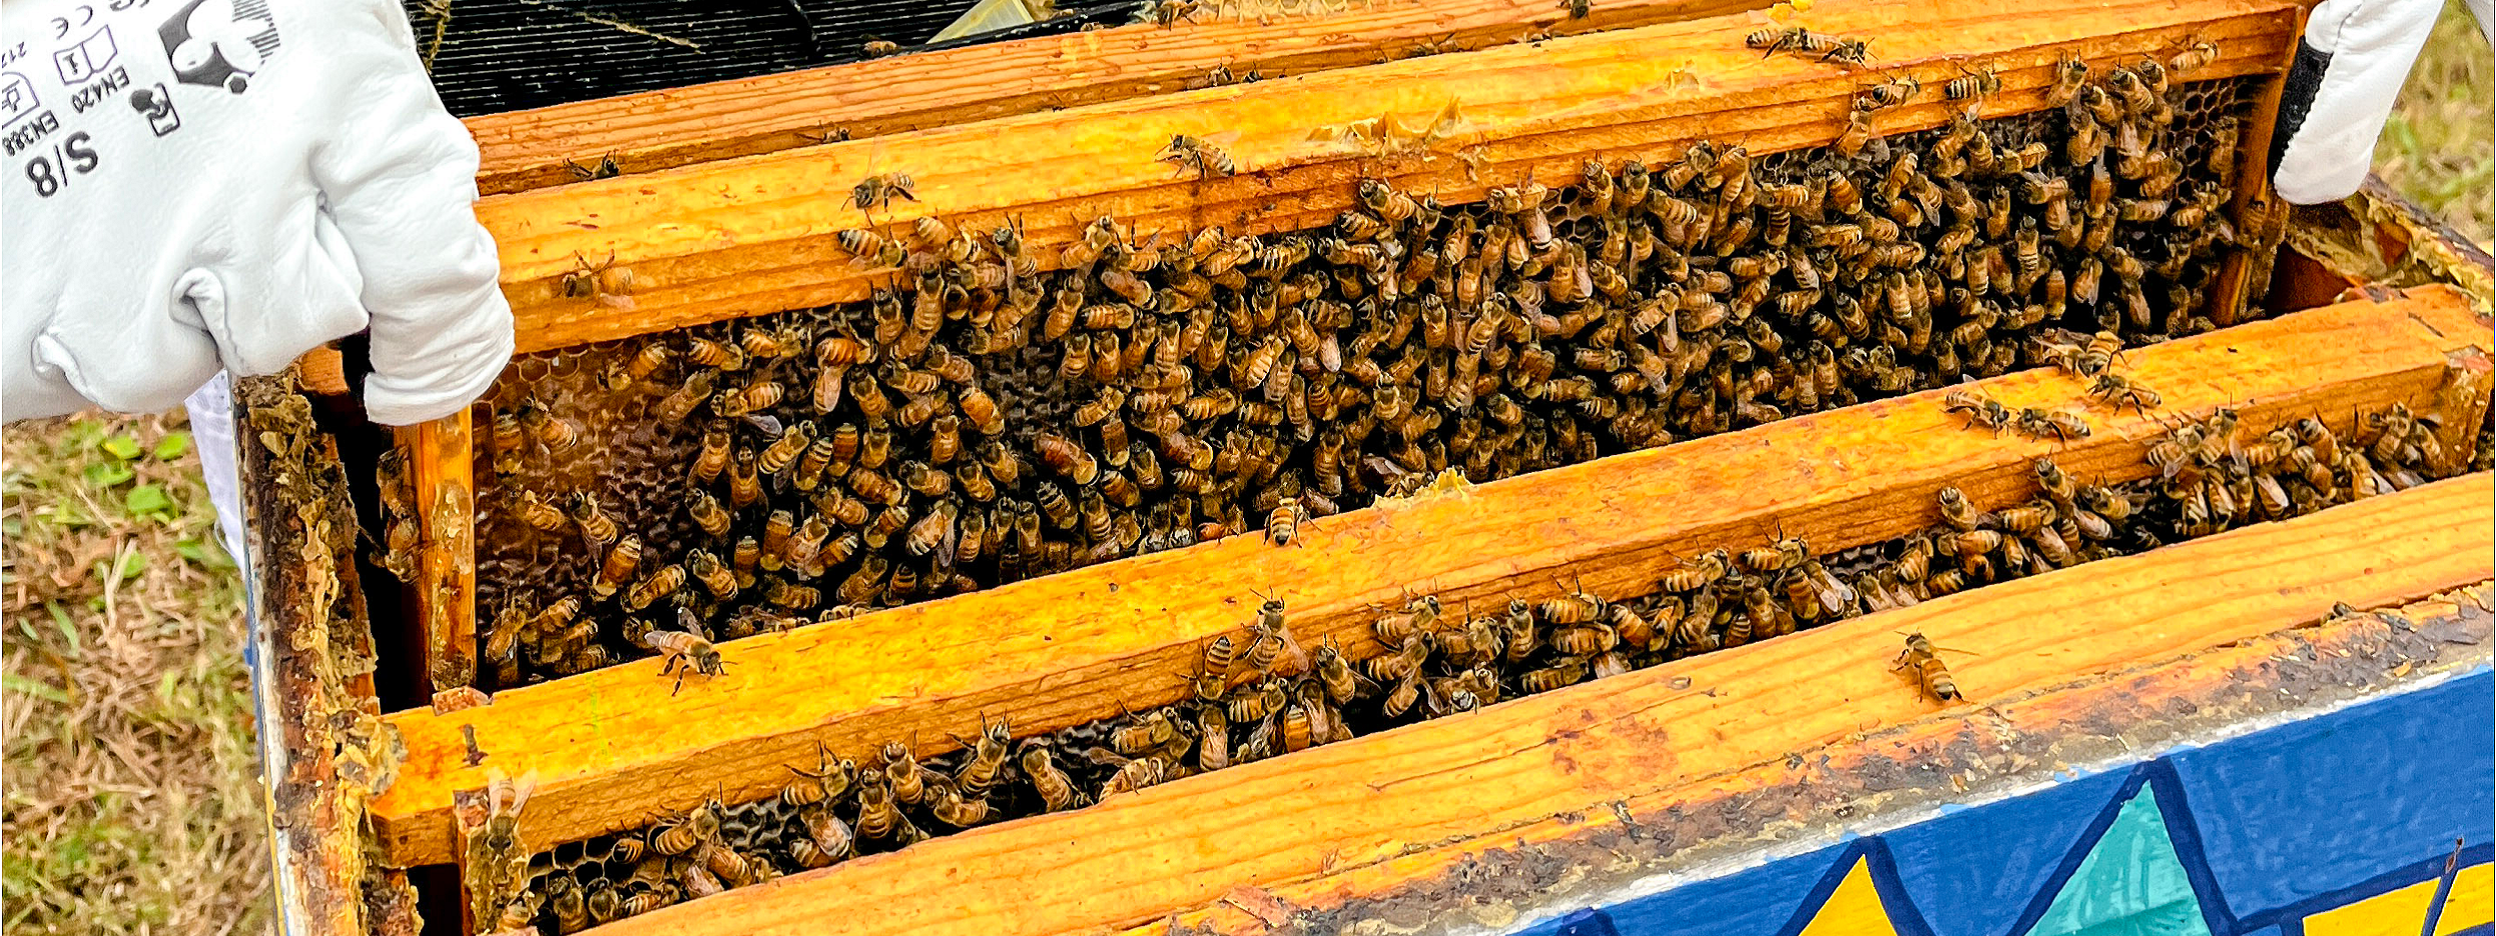 Close-up shot of beehive